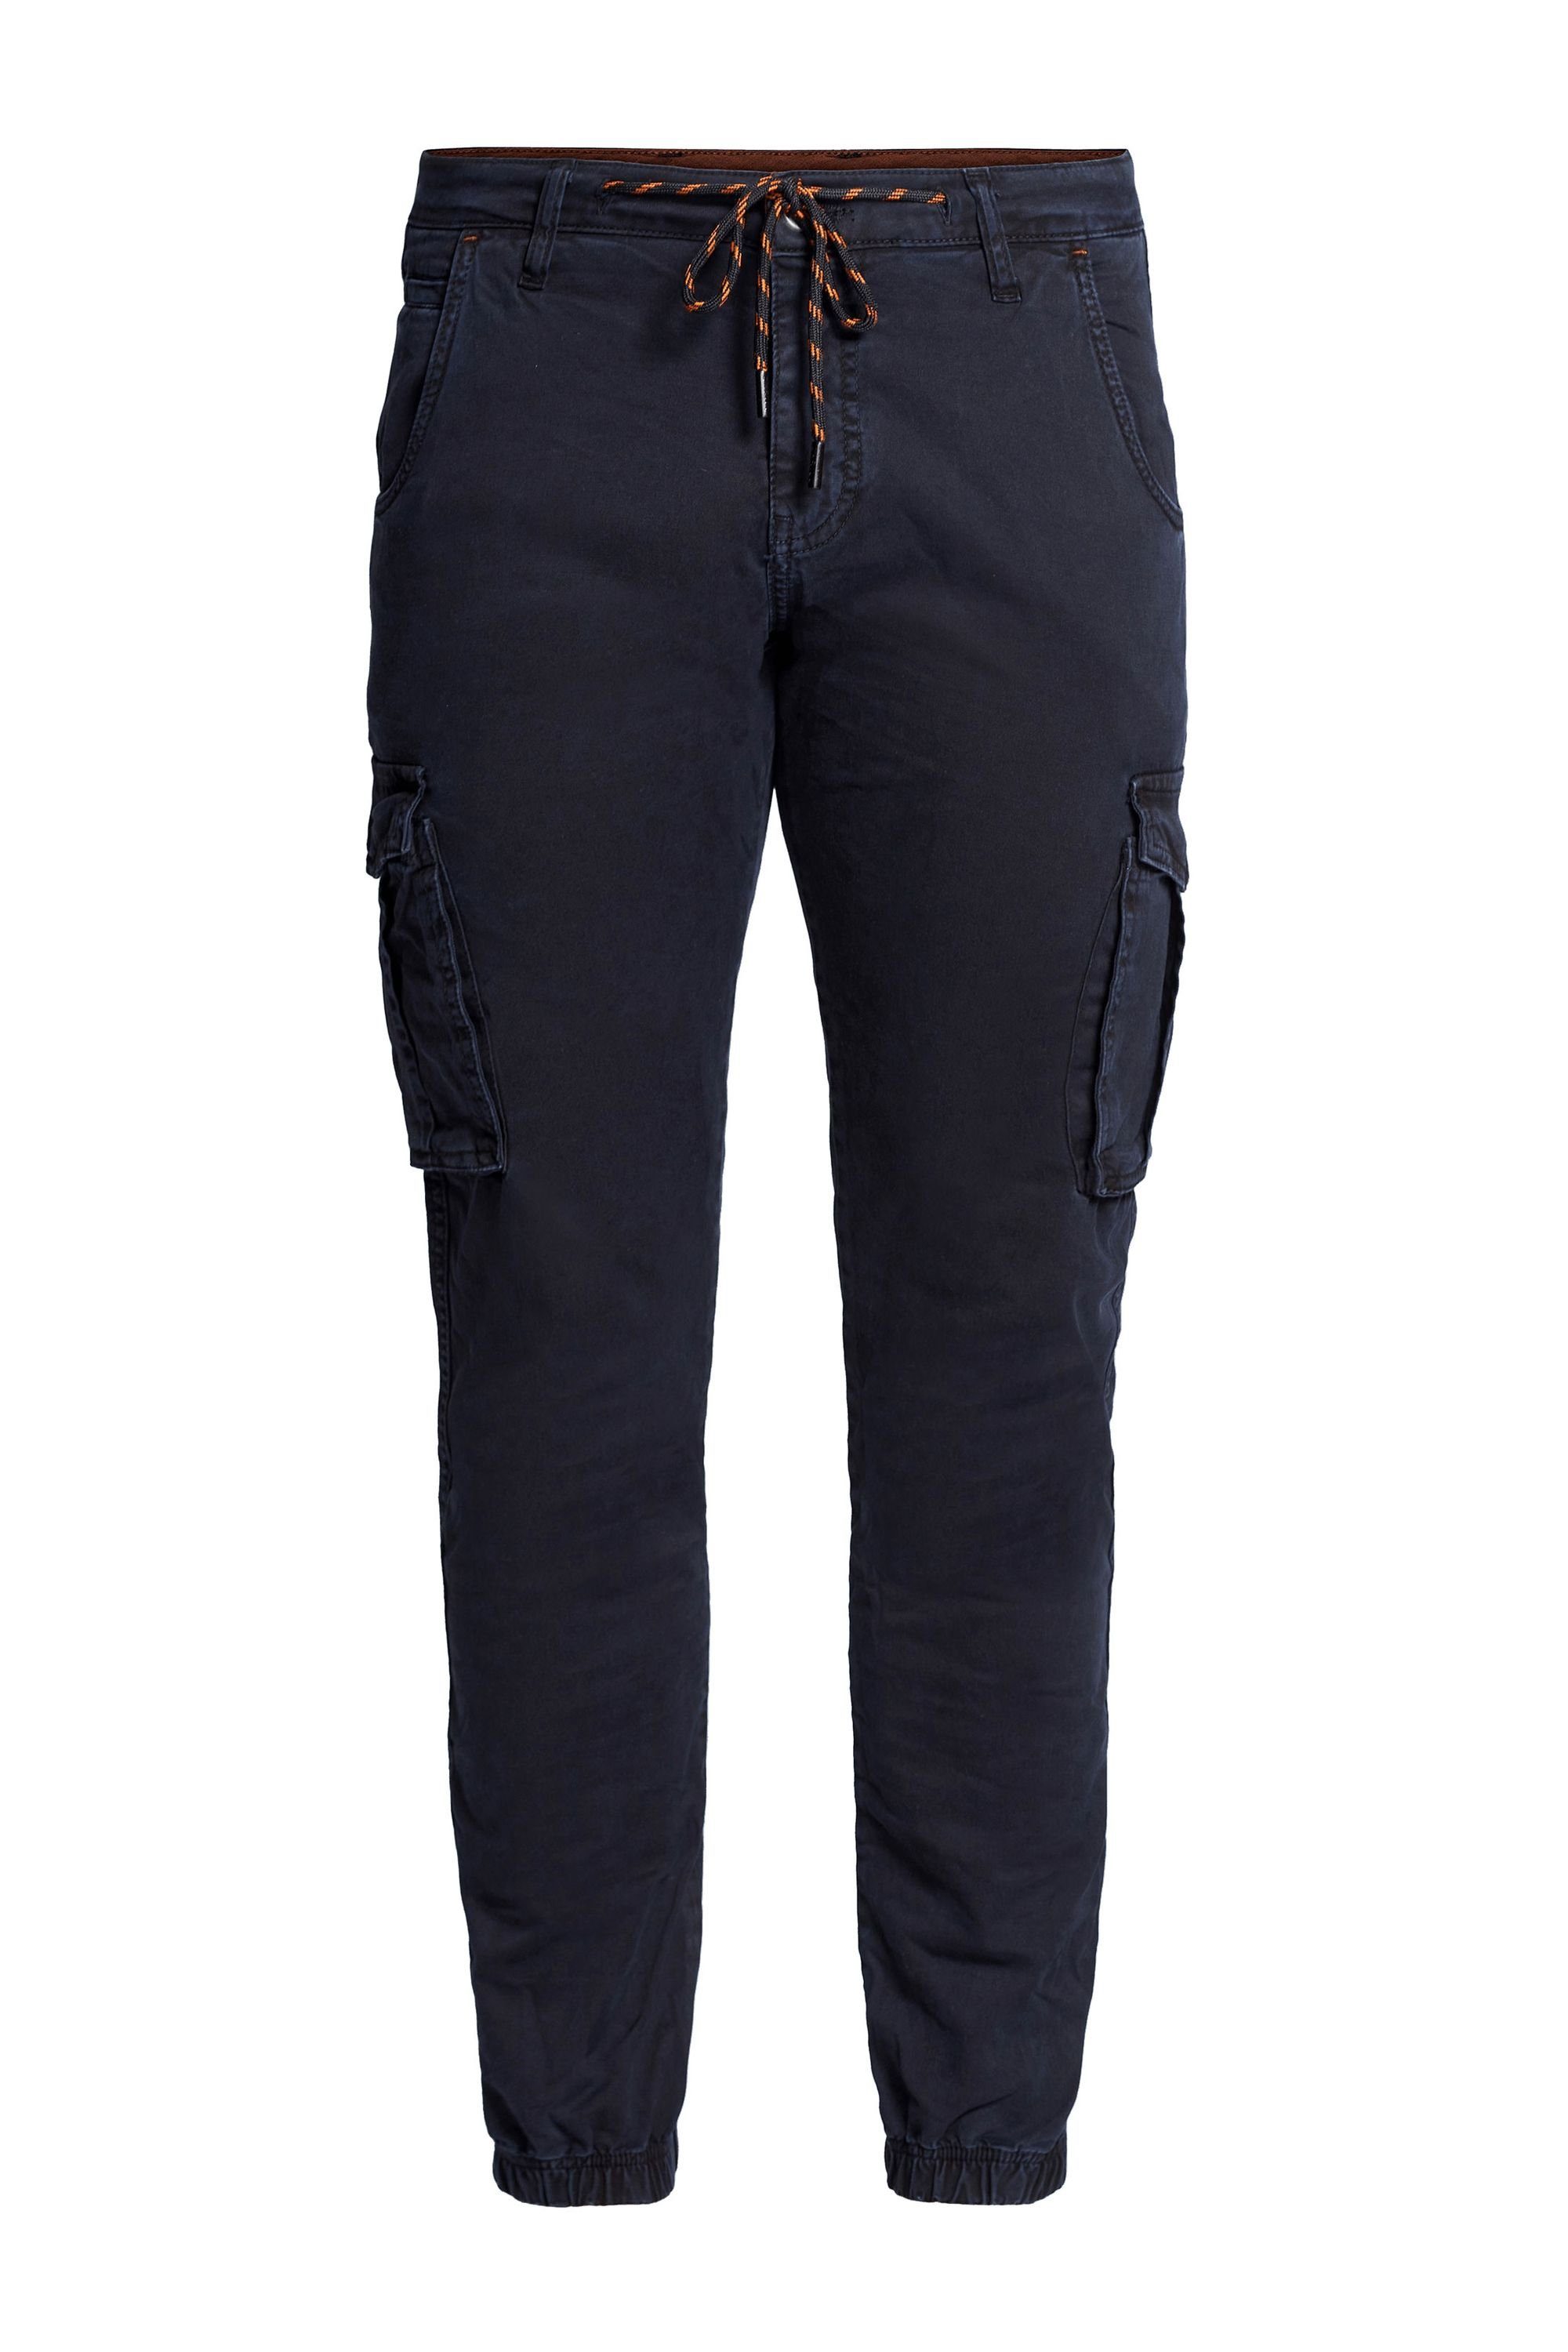 Zhrill 5-Pocket-Jeans Cargo Hose MICHA Black angenehmer Tragekomfort